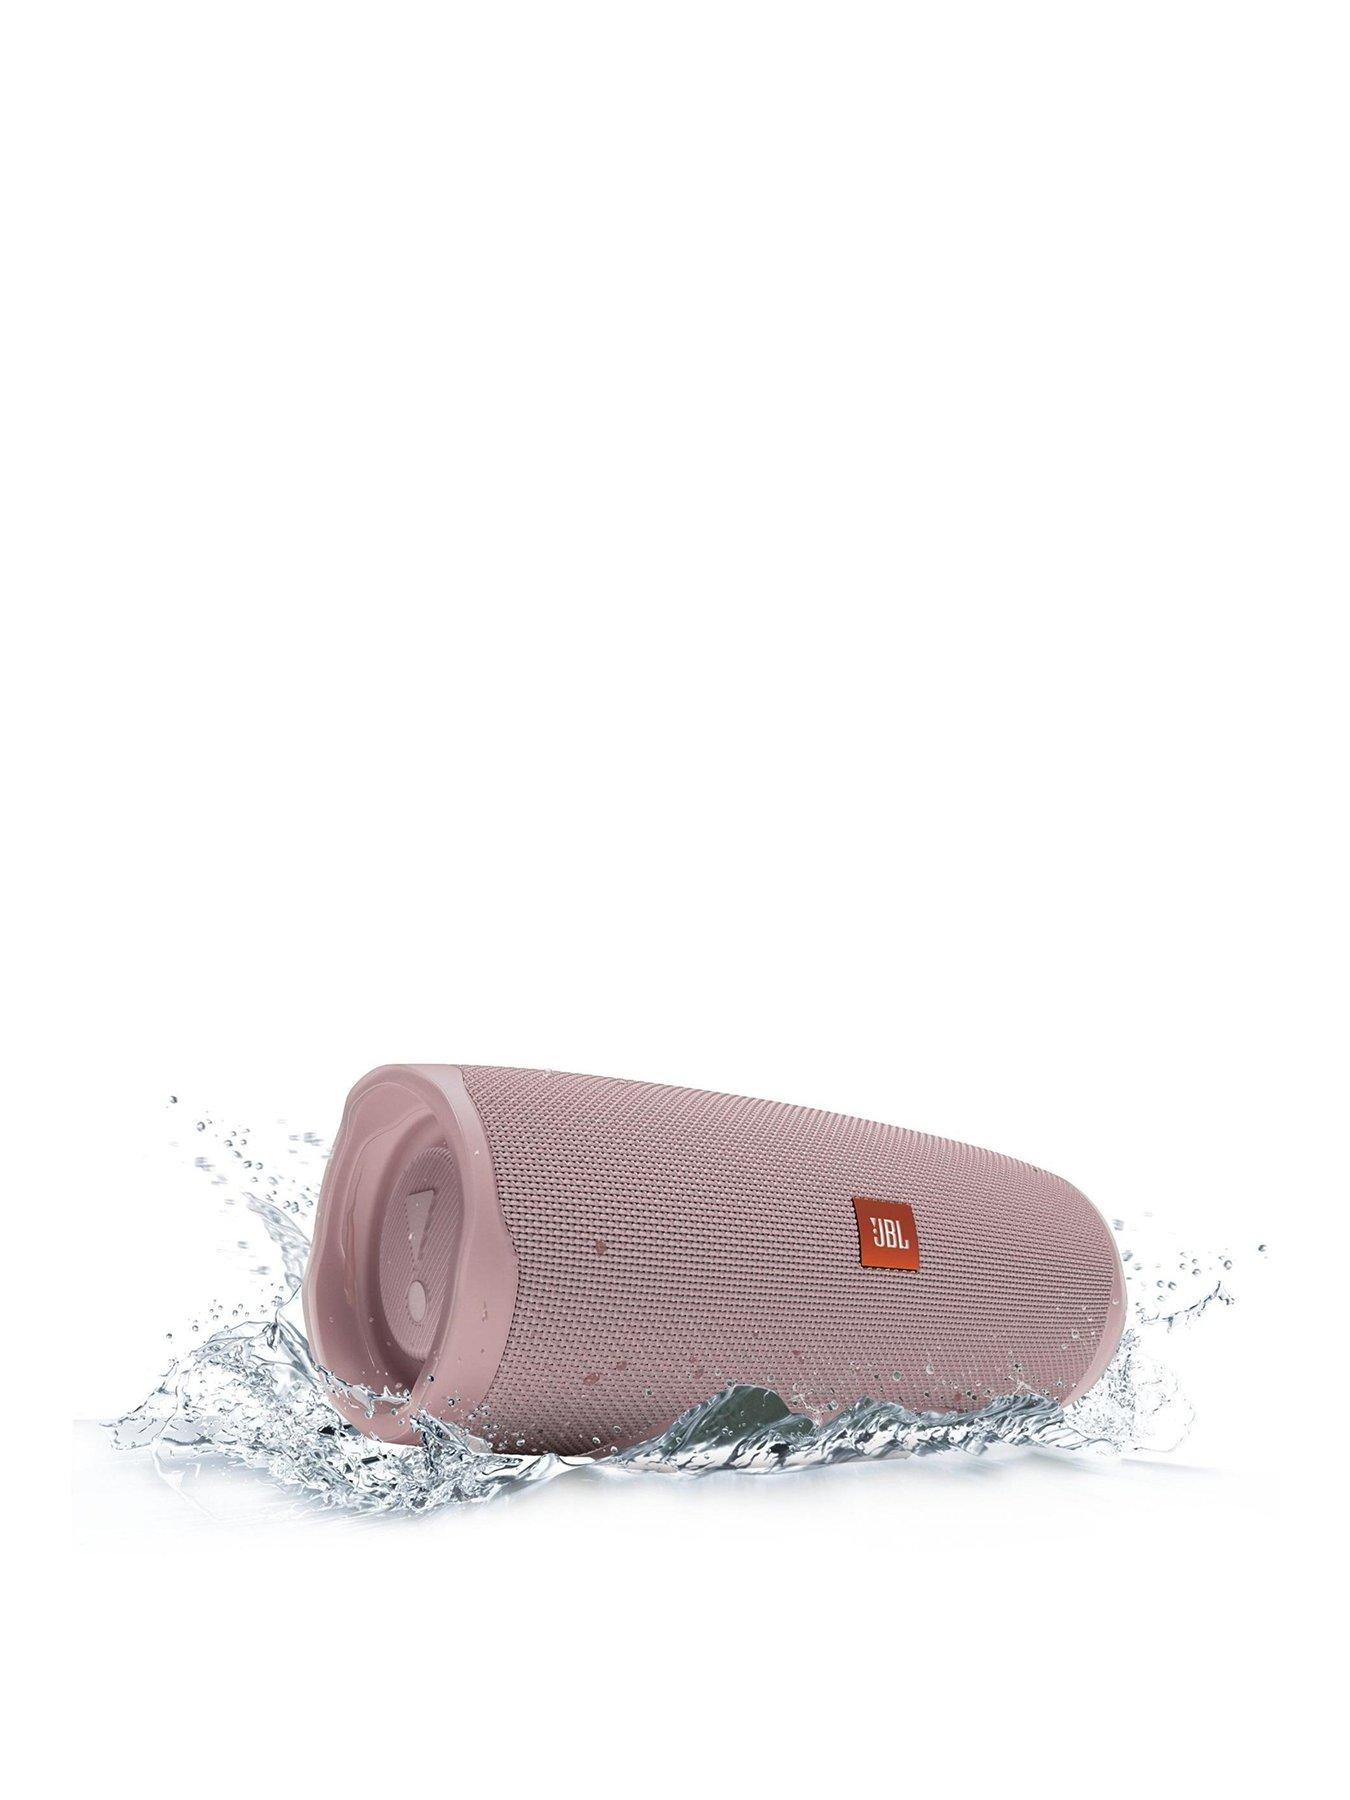 Jbl Charge 4 Portable Bluetooth Speaker – Pink